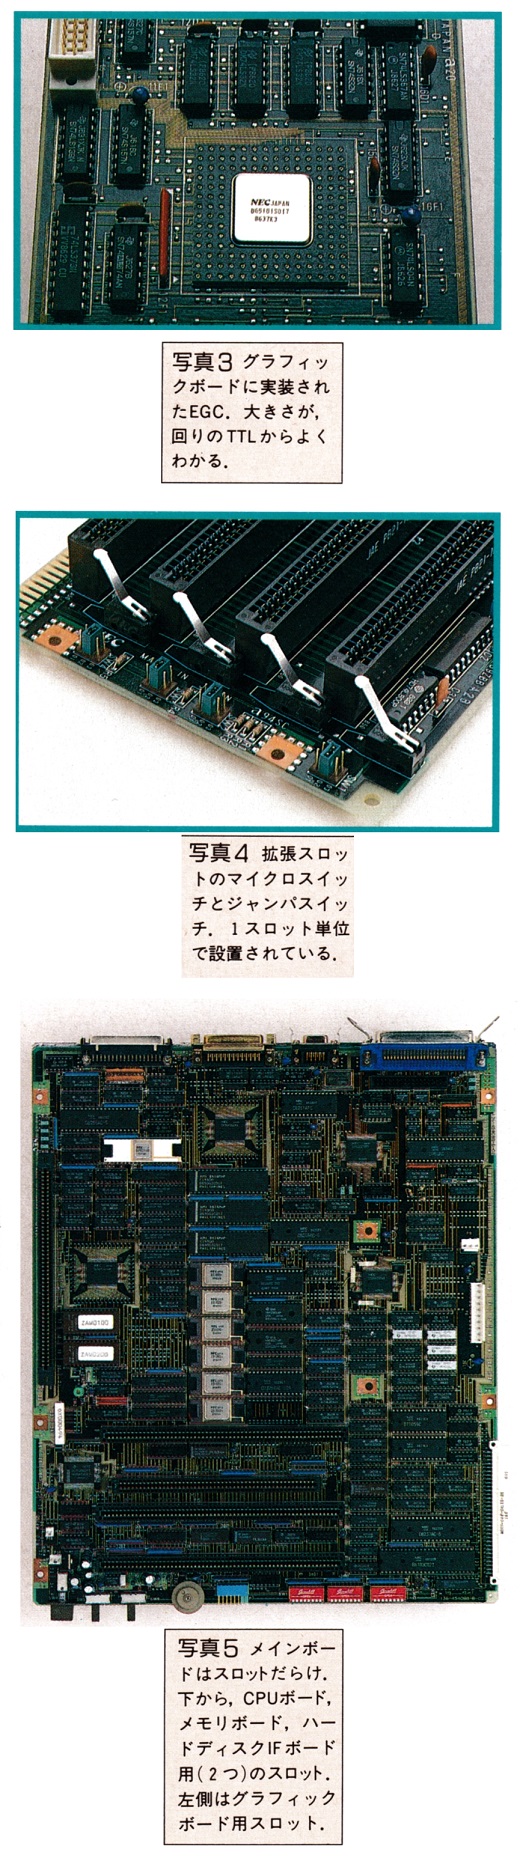 ASCII1987(02)e09PC-98XL_写真3-5_W520.jpg